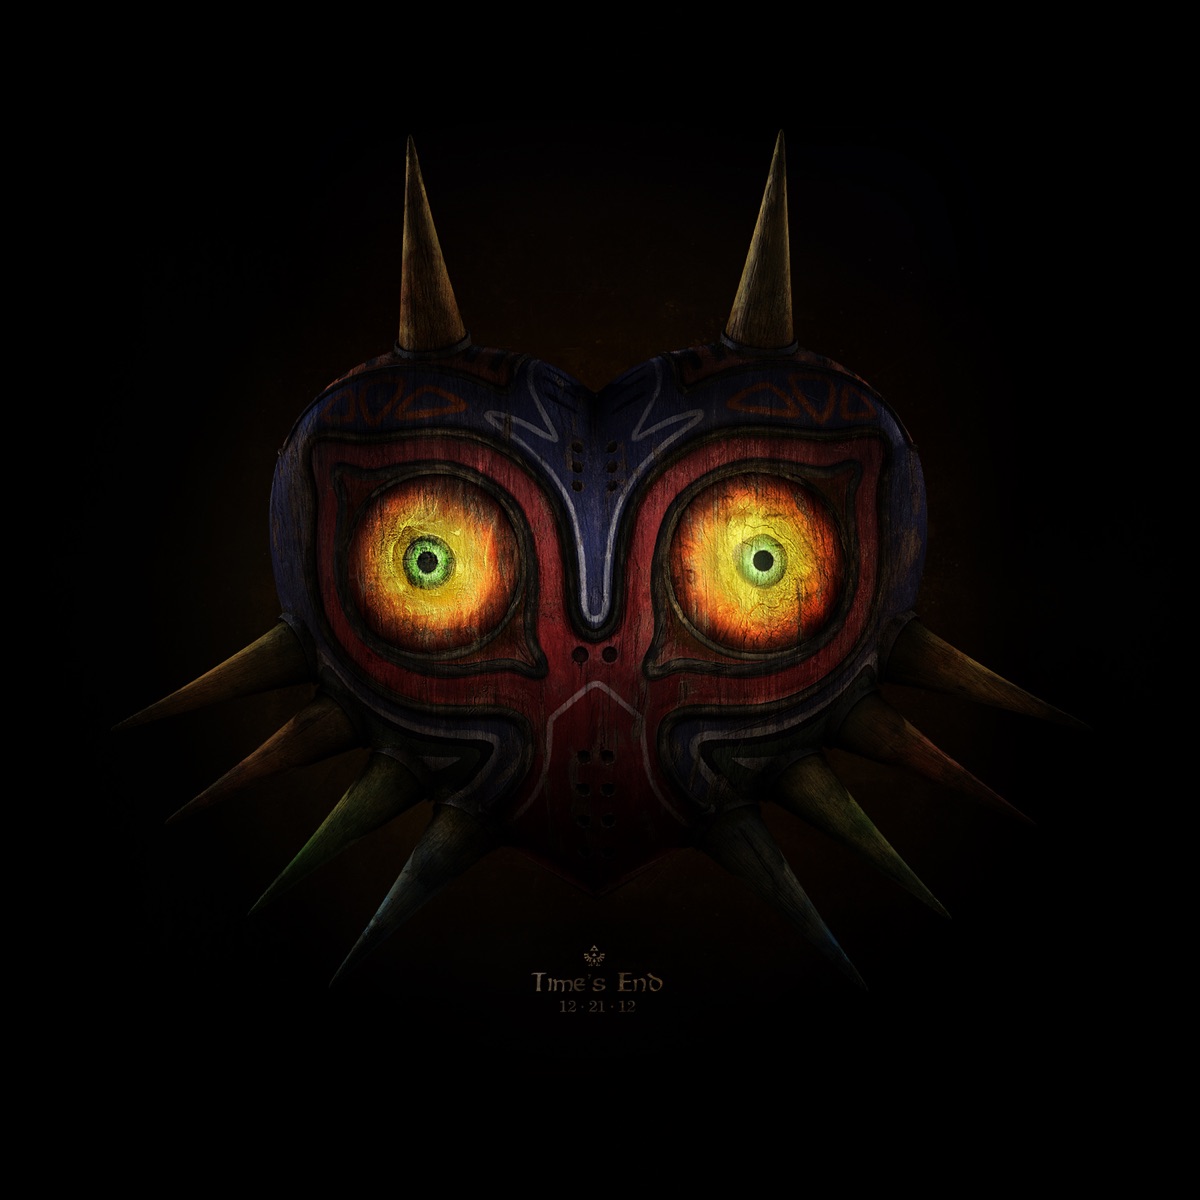 The Legend of Zelda - Ocarina of Time (Mastered) (Select Soundtrack) -  Album by Monsalve